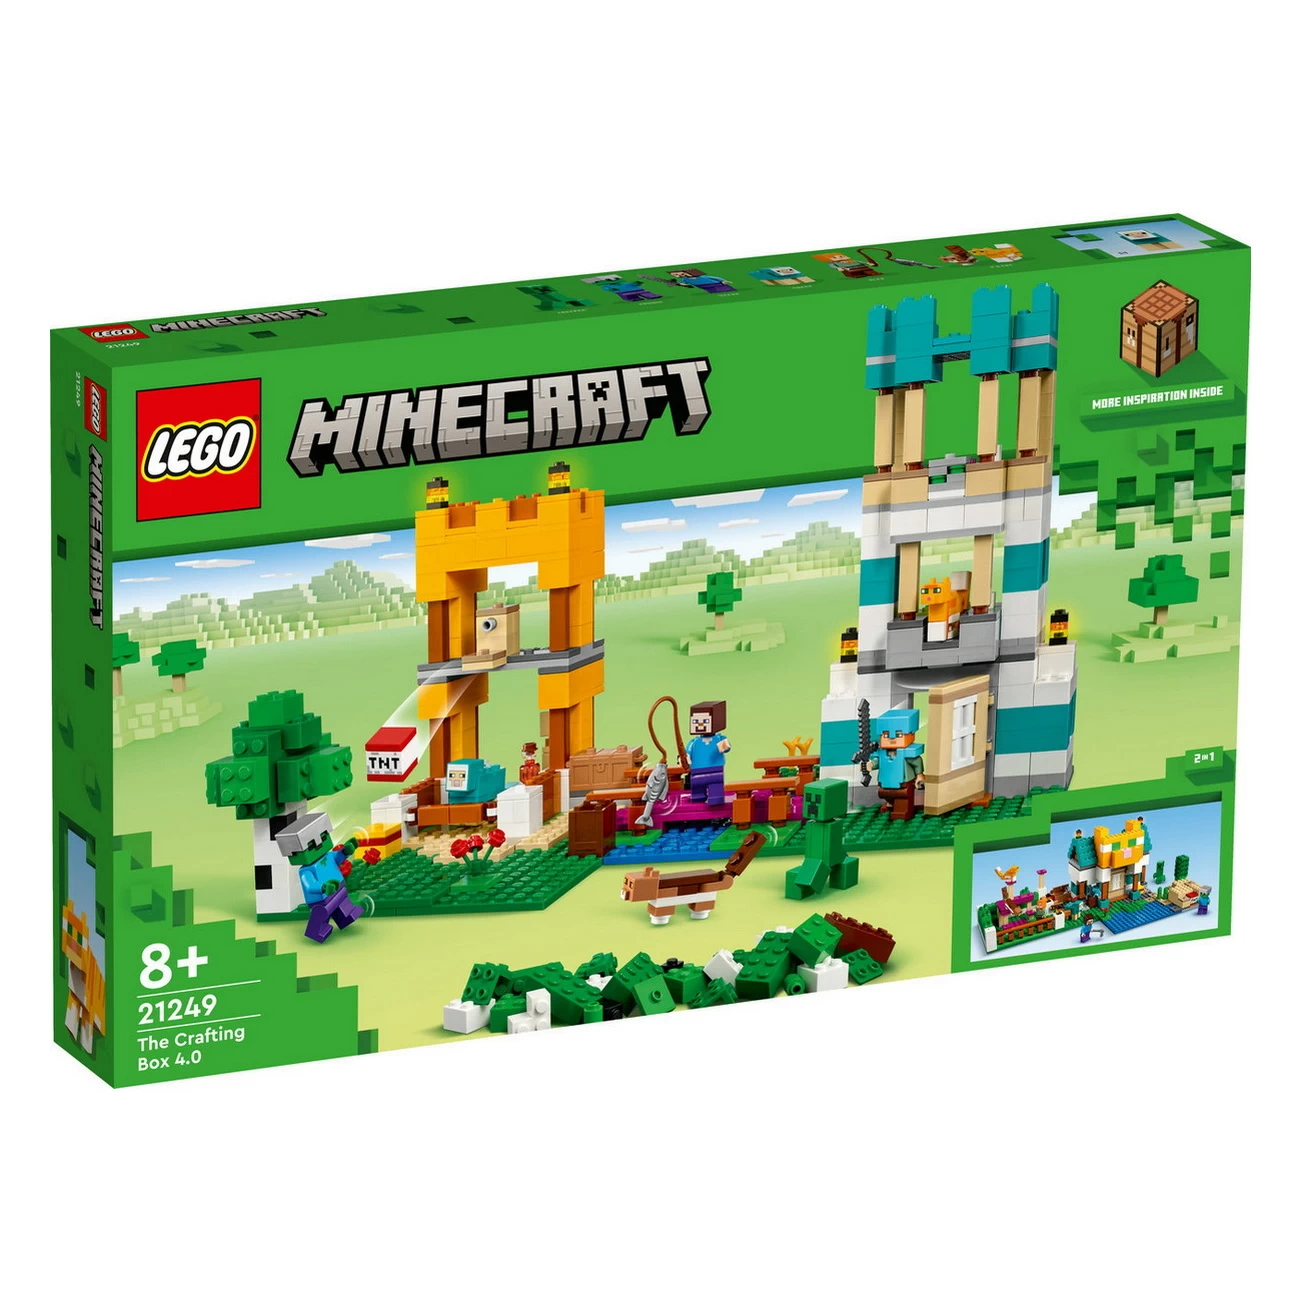 LEGO Minecraft 21249 -  Die Crafting-Box 4.0